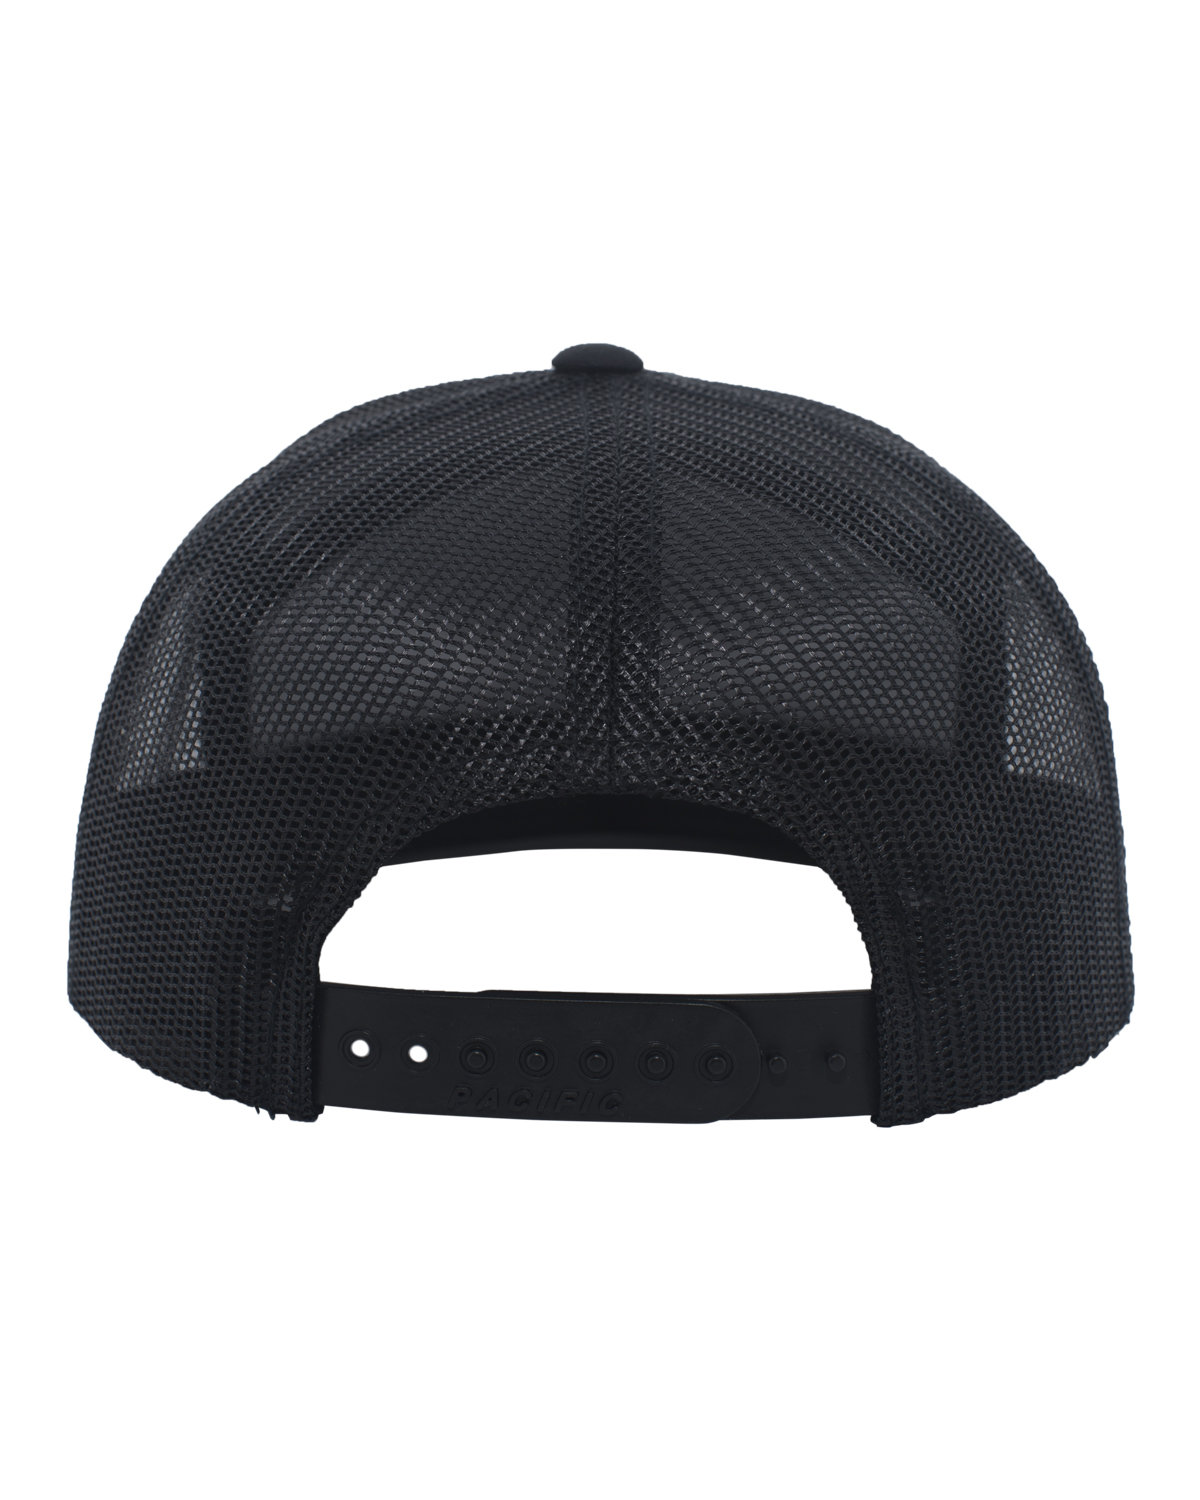 Pacific Headwear 6-Panel Arch Trucker Snapback Cap | alphabroder